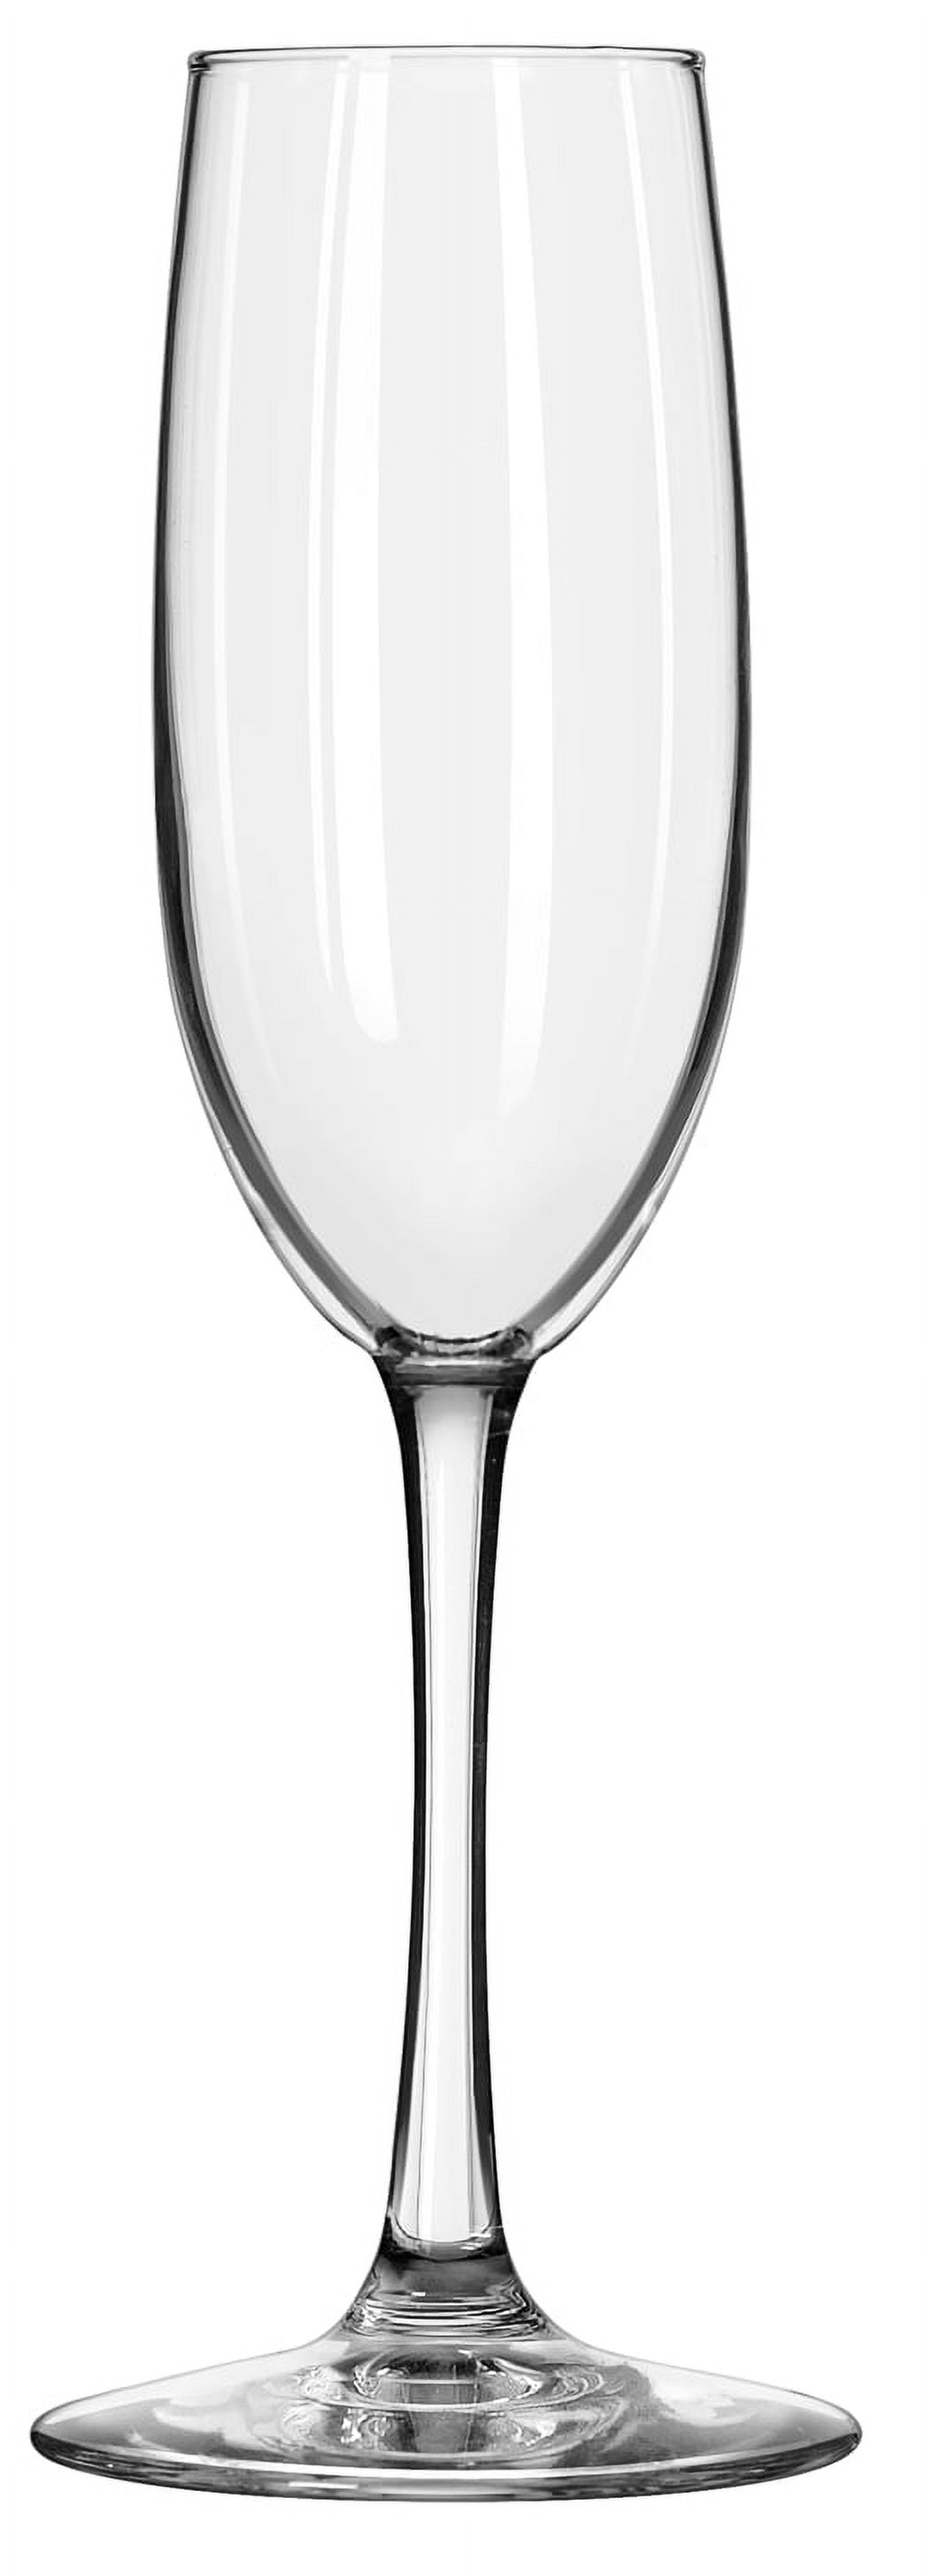 Libbey 228 8.5 oz Stemless Flute/Champagne Glass - 1 Doz